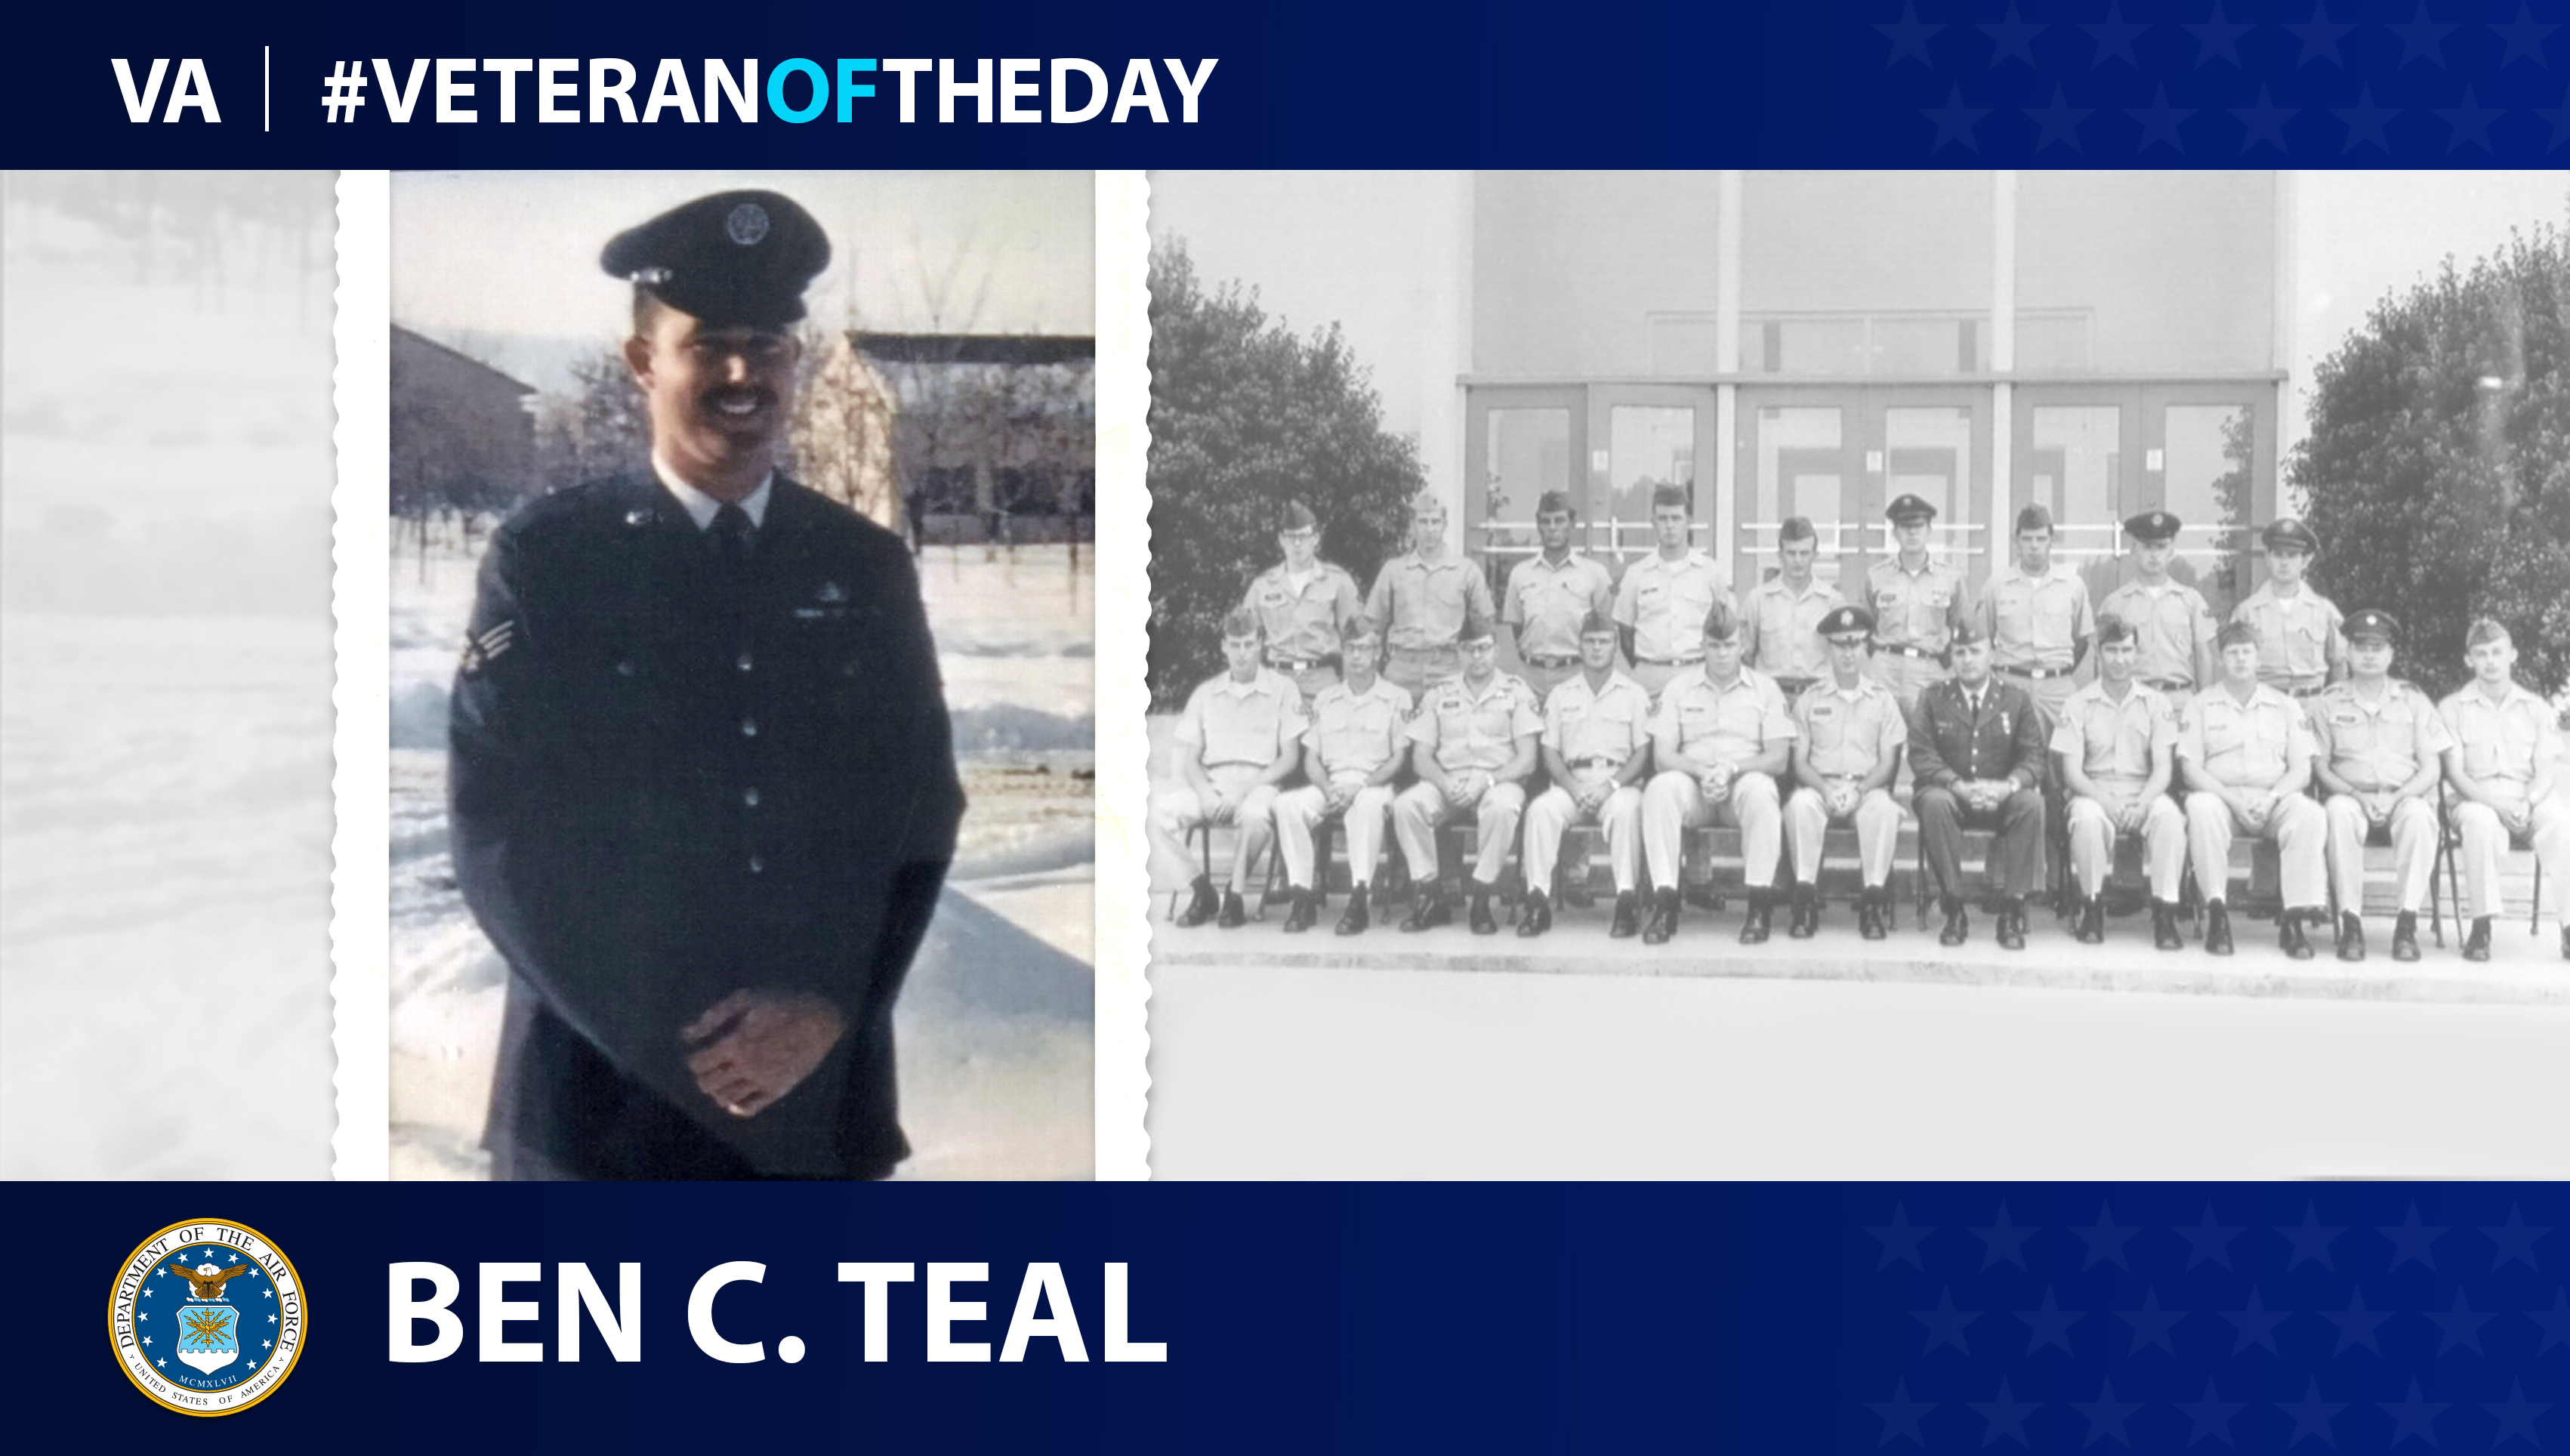 Air Force Veteran Ben Teal is today's Veteran of the day.